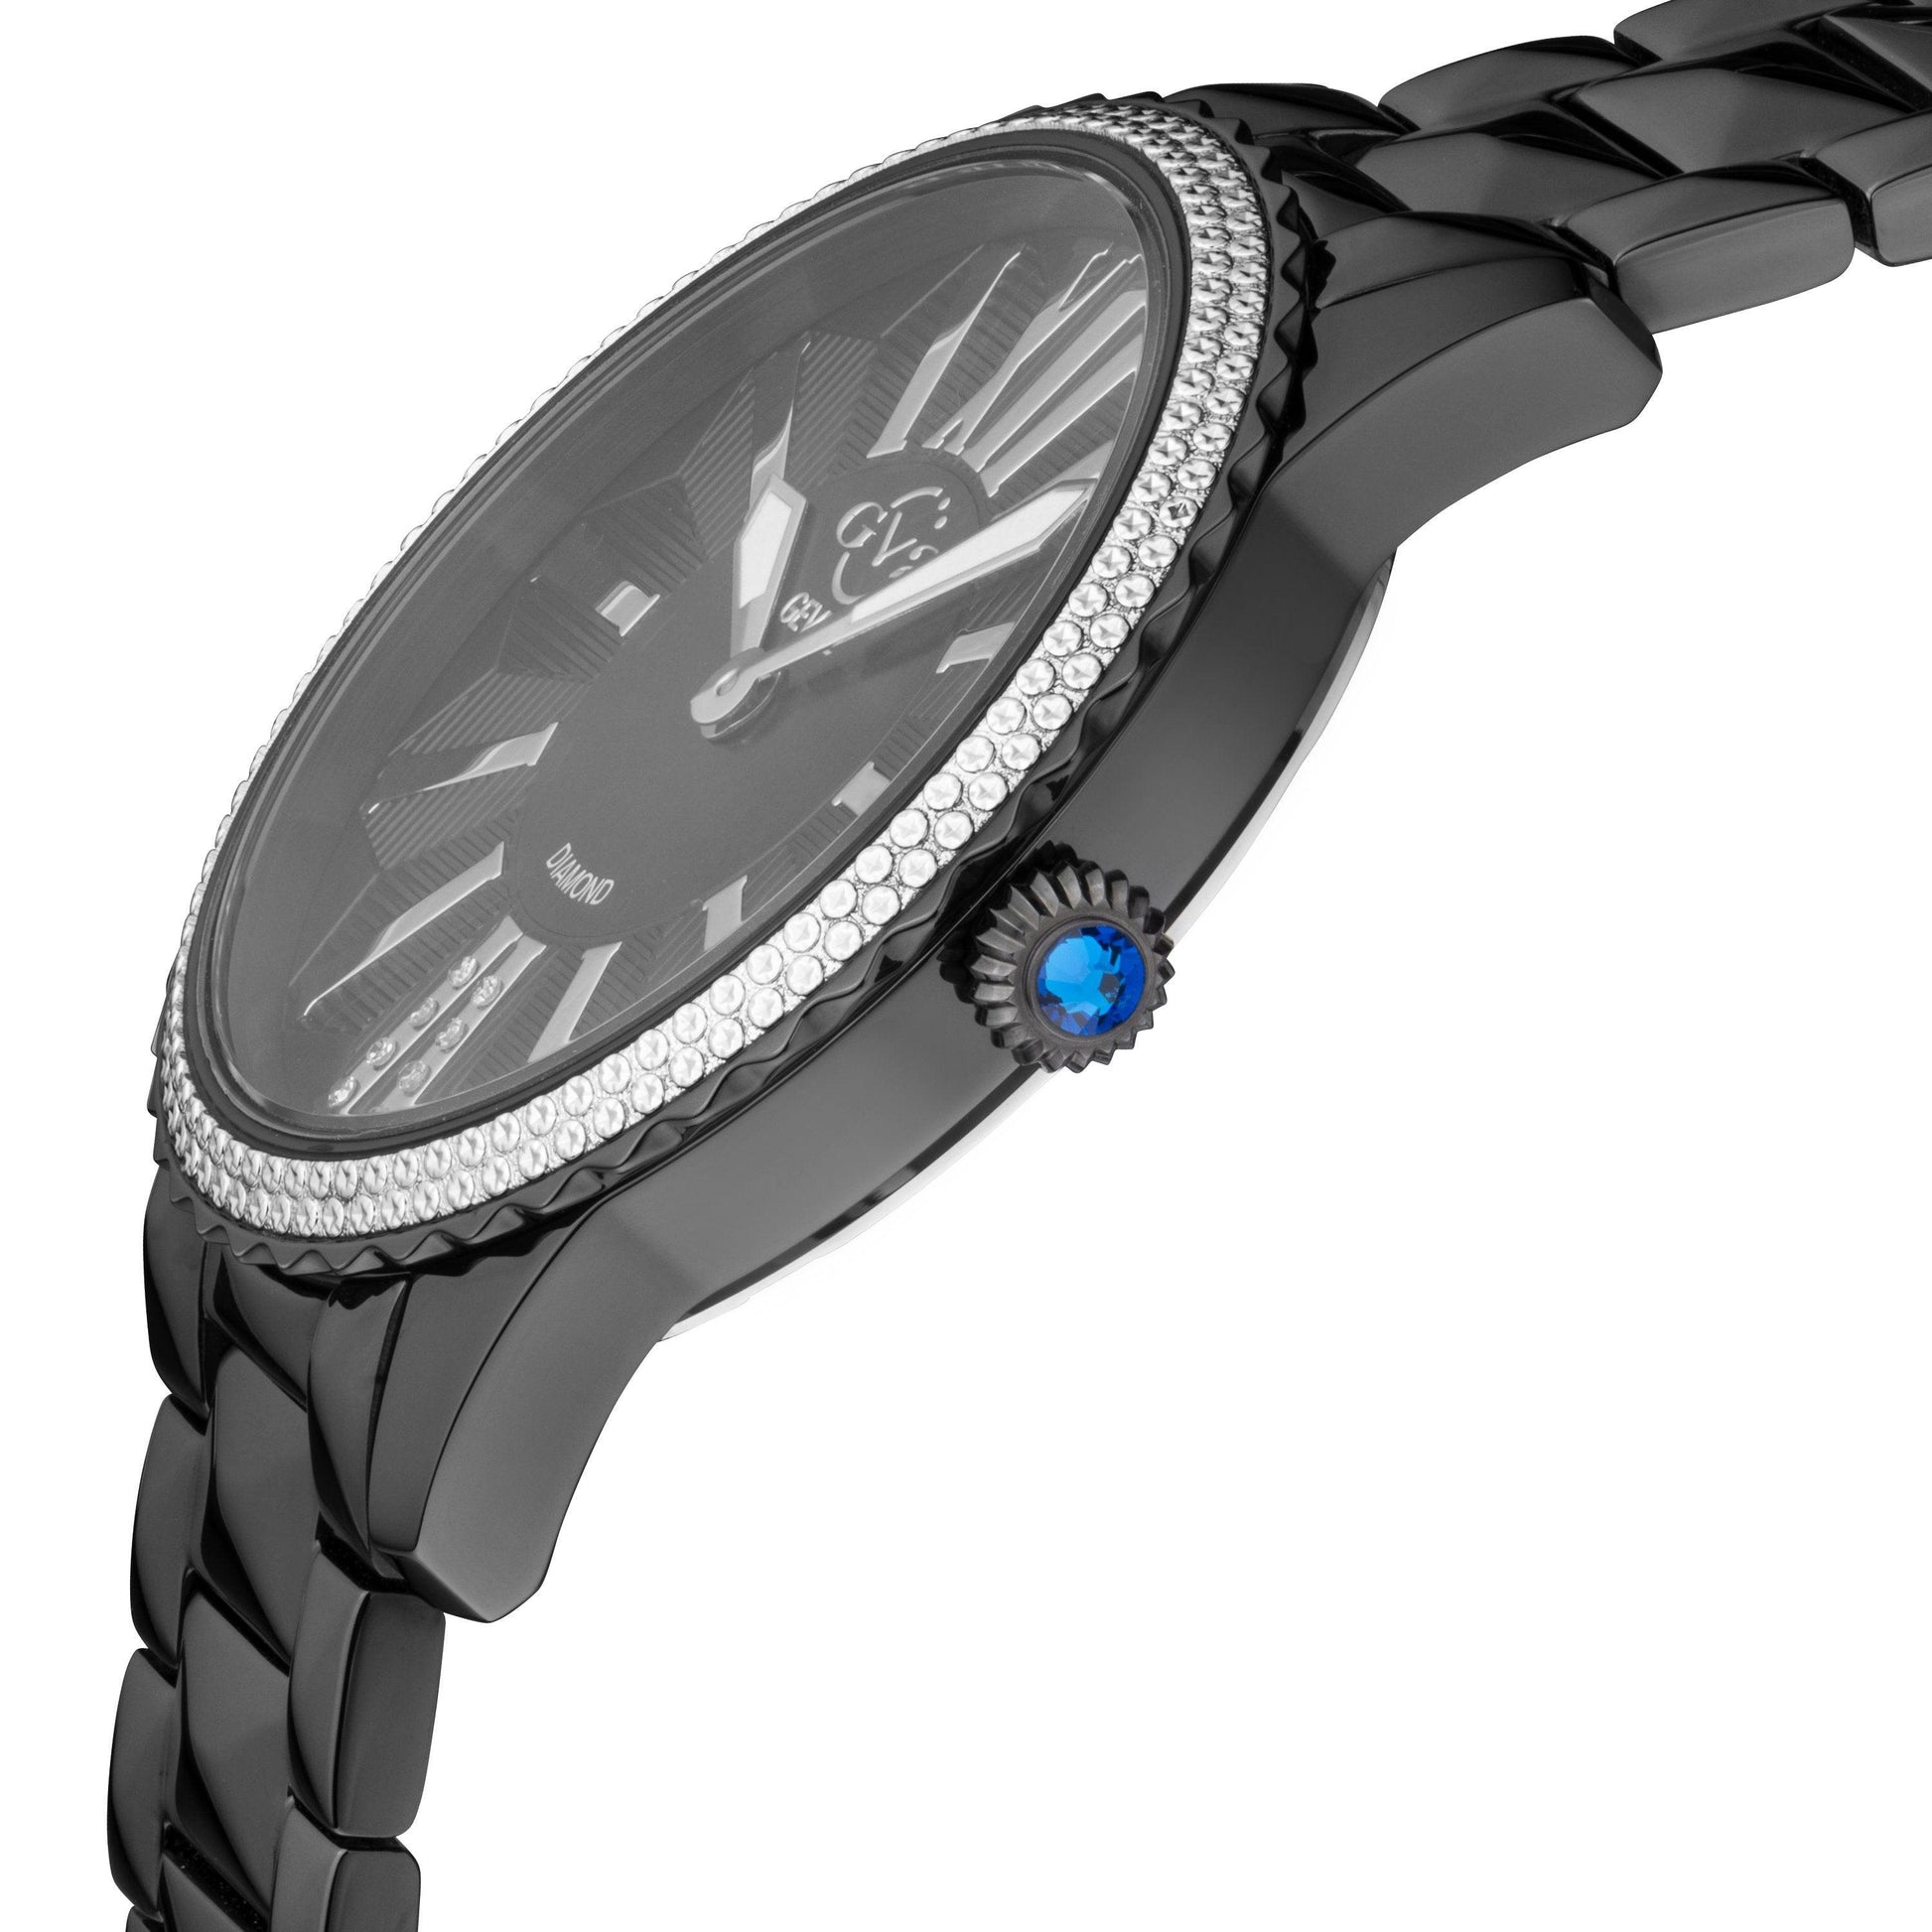 Gevril-Luxury-Swiss-Watches-GV2 Siena Diamond-11724